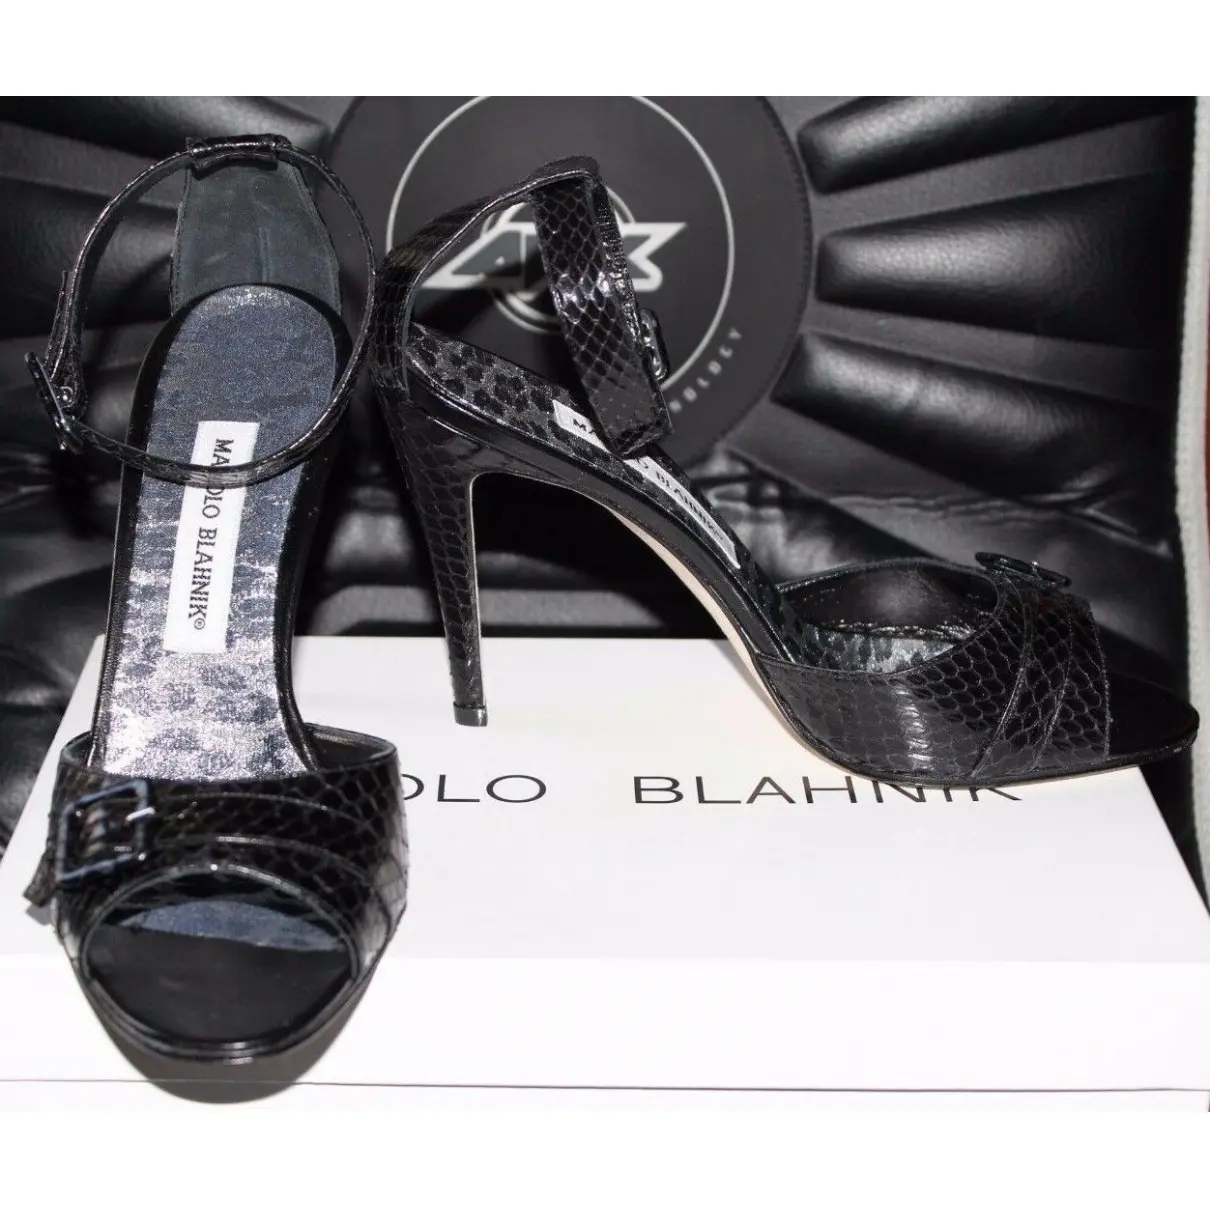 Buy Manolo Blahnik Sandals online